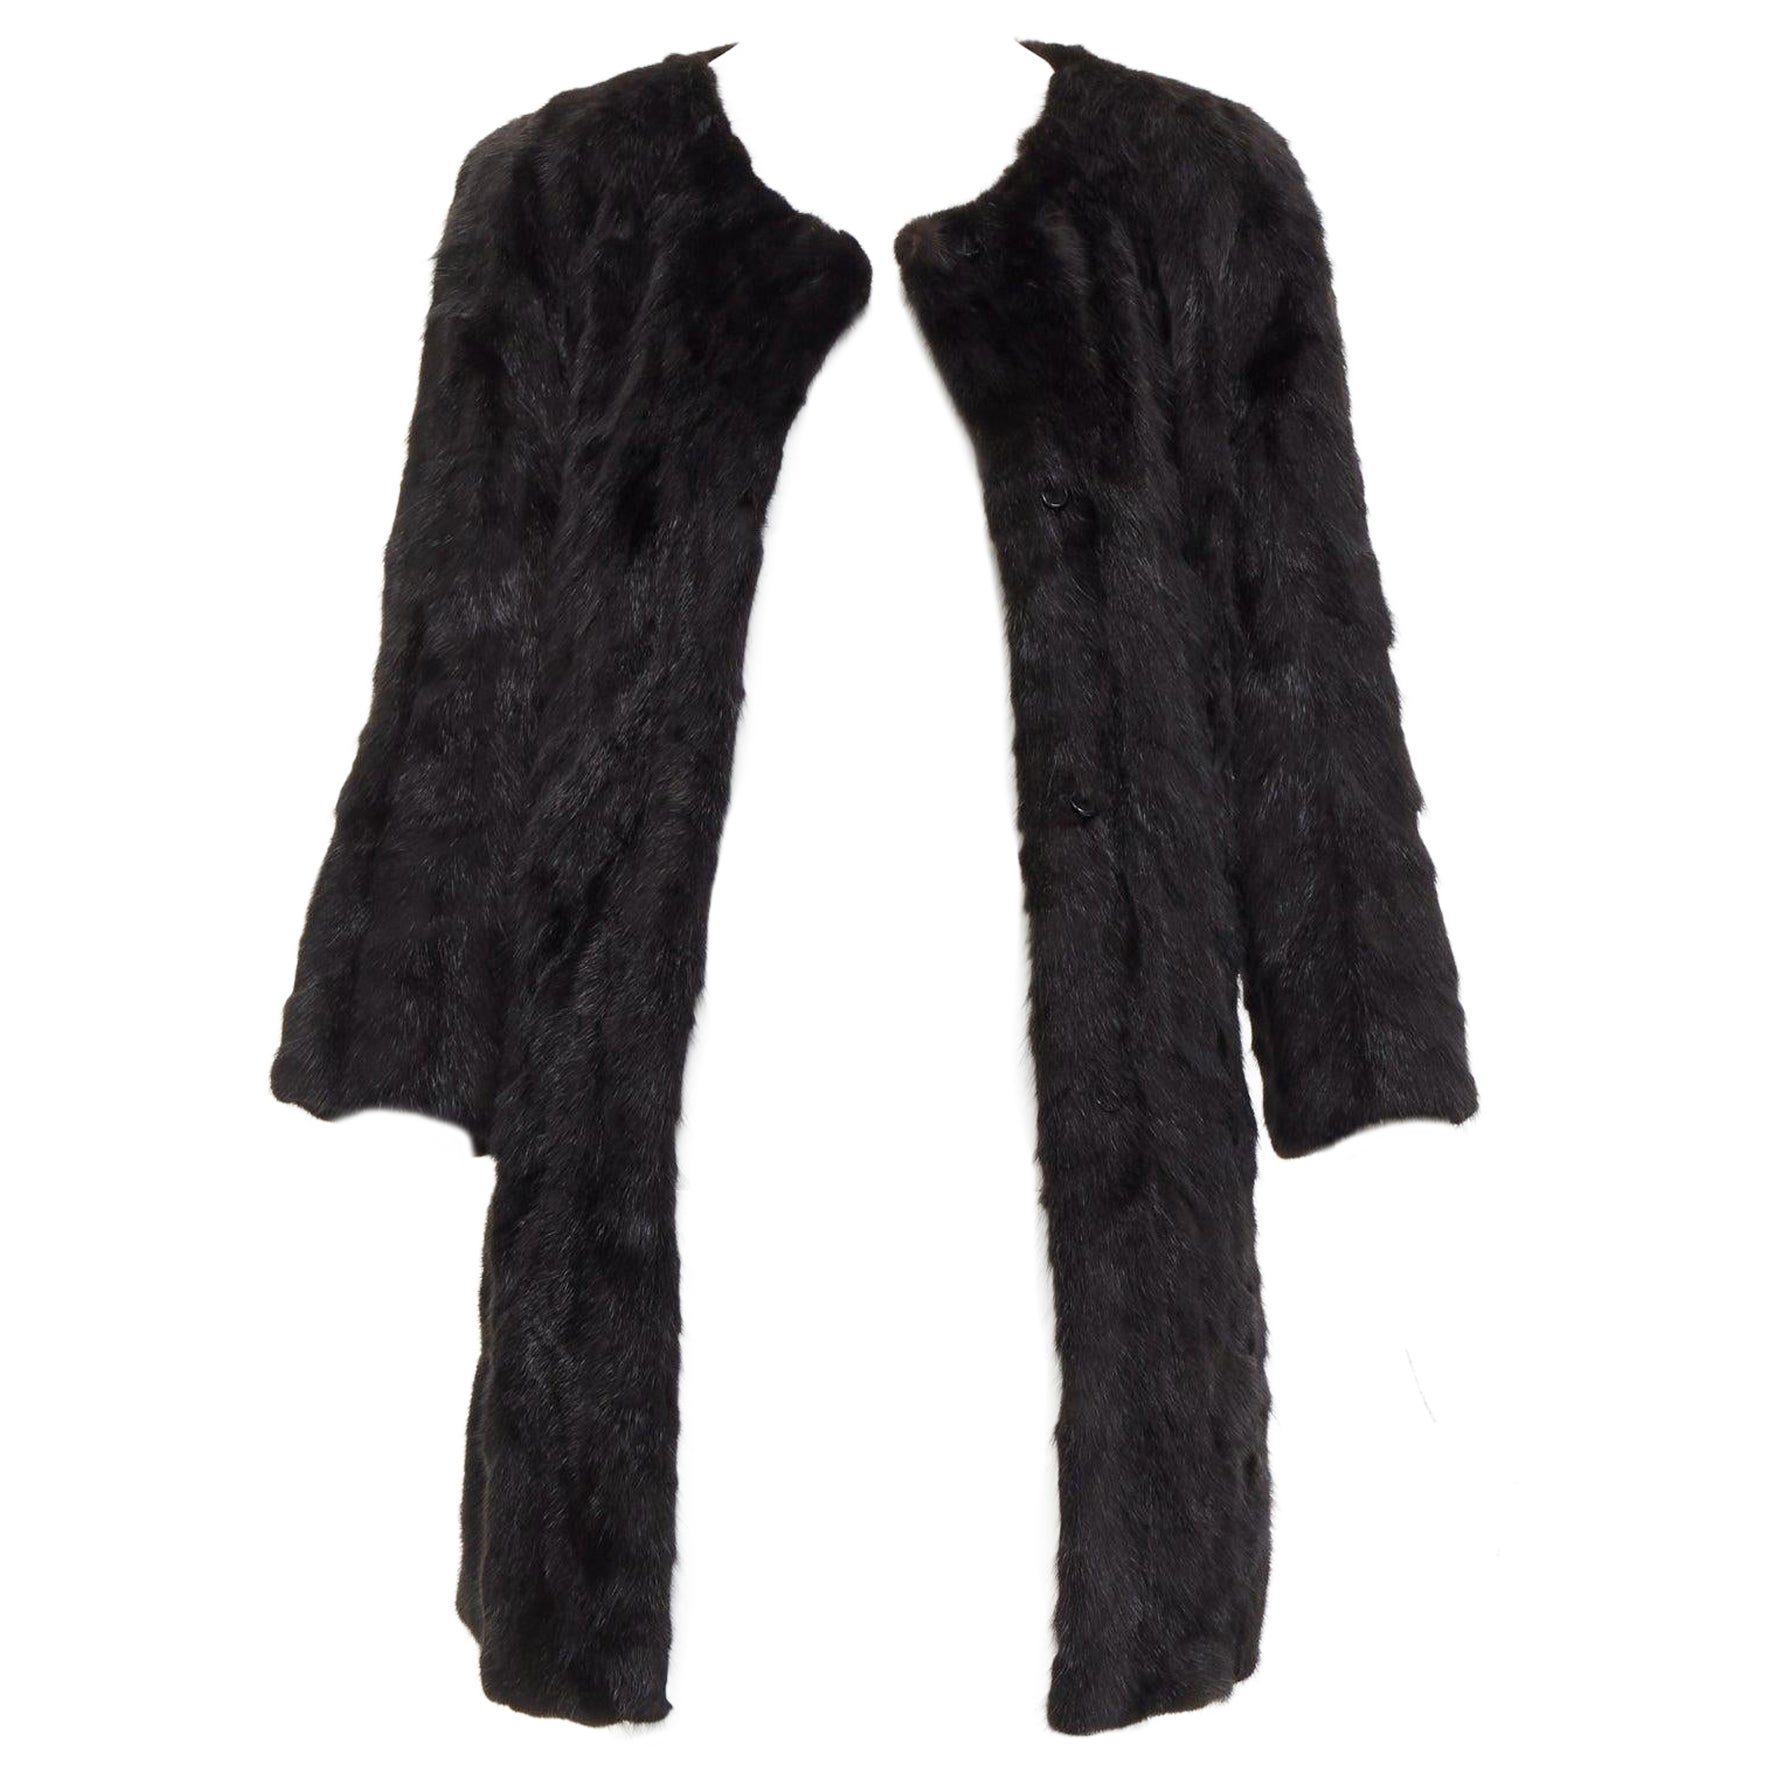 CHEVITTE dark brown genuine fur jewel neck cropped sleeves coat top M For Sale